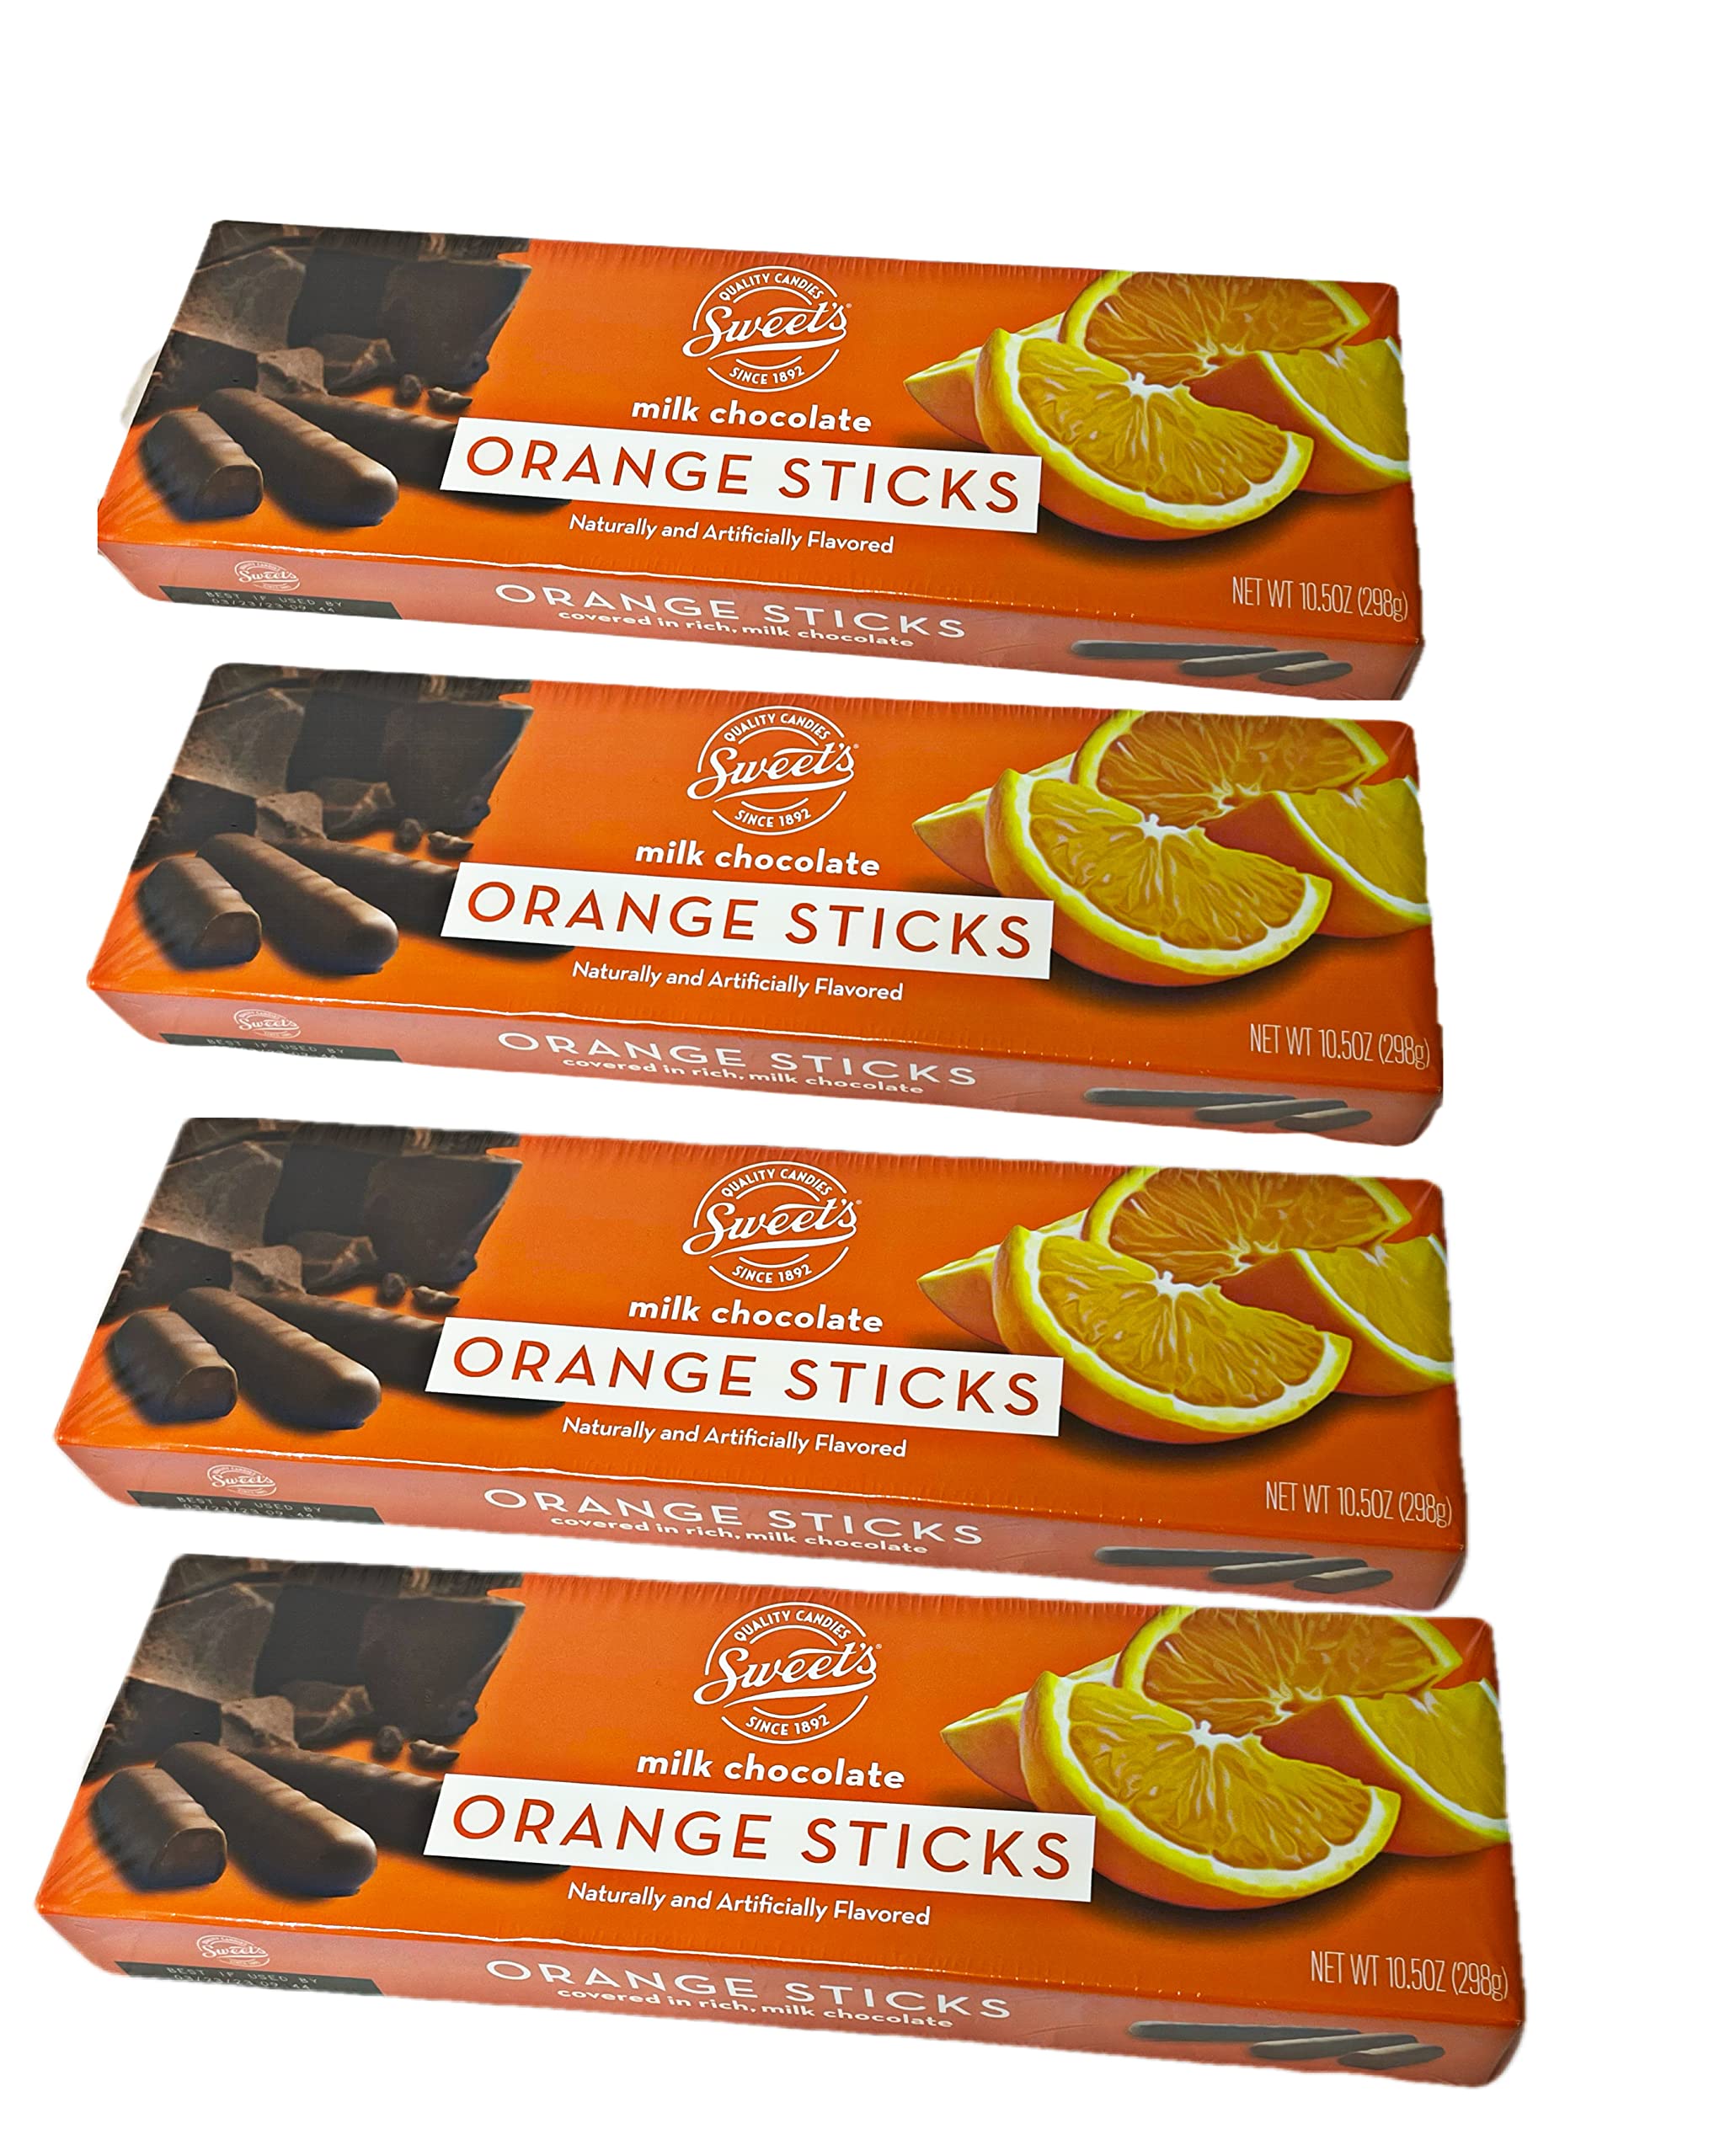 Sweet's Milk Chocolate Orange Sticks, 10.5oz Box(Pack of 4 boxes)